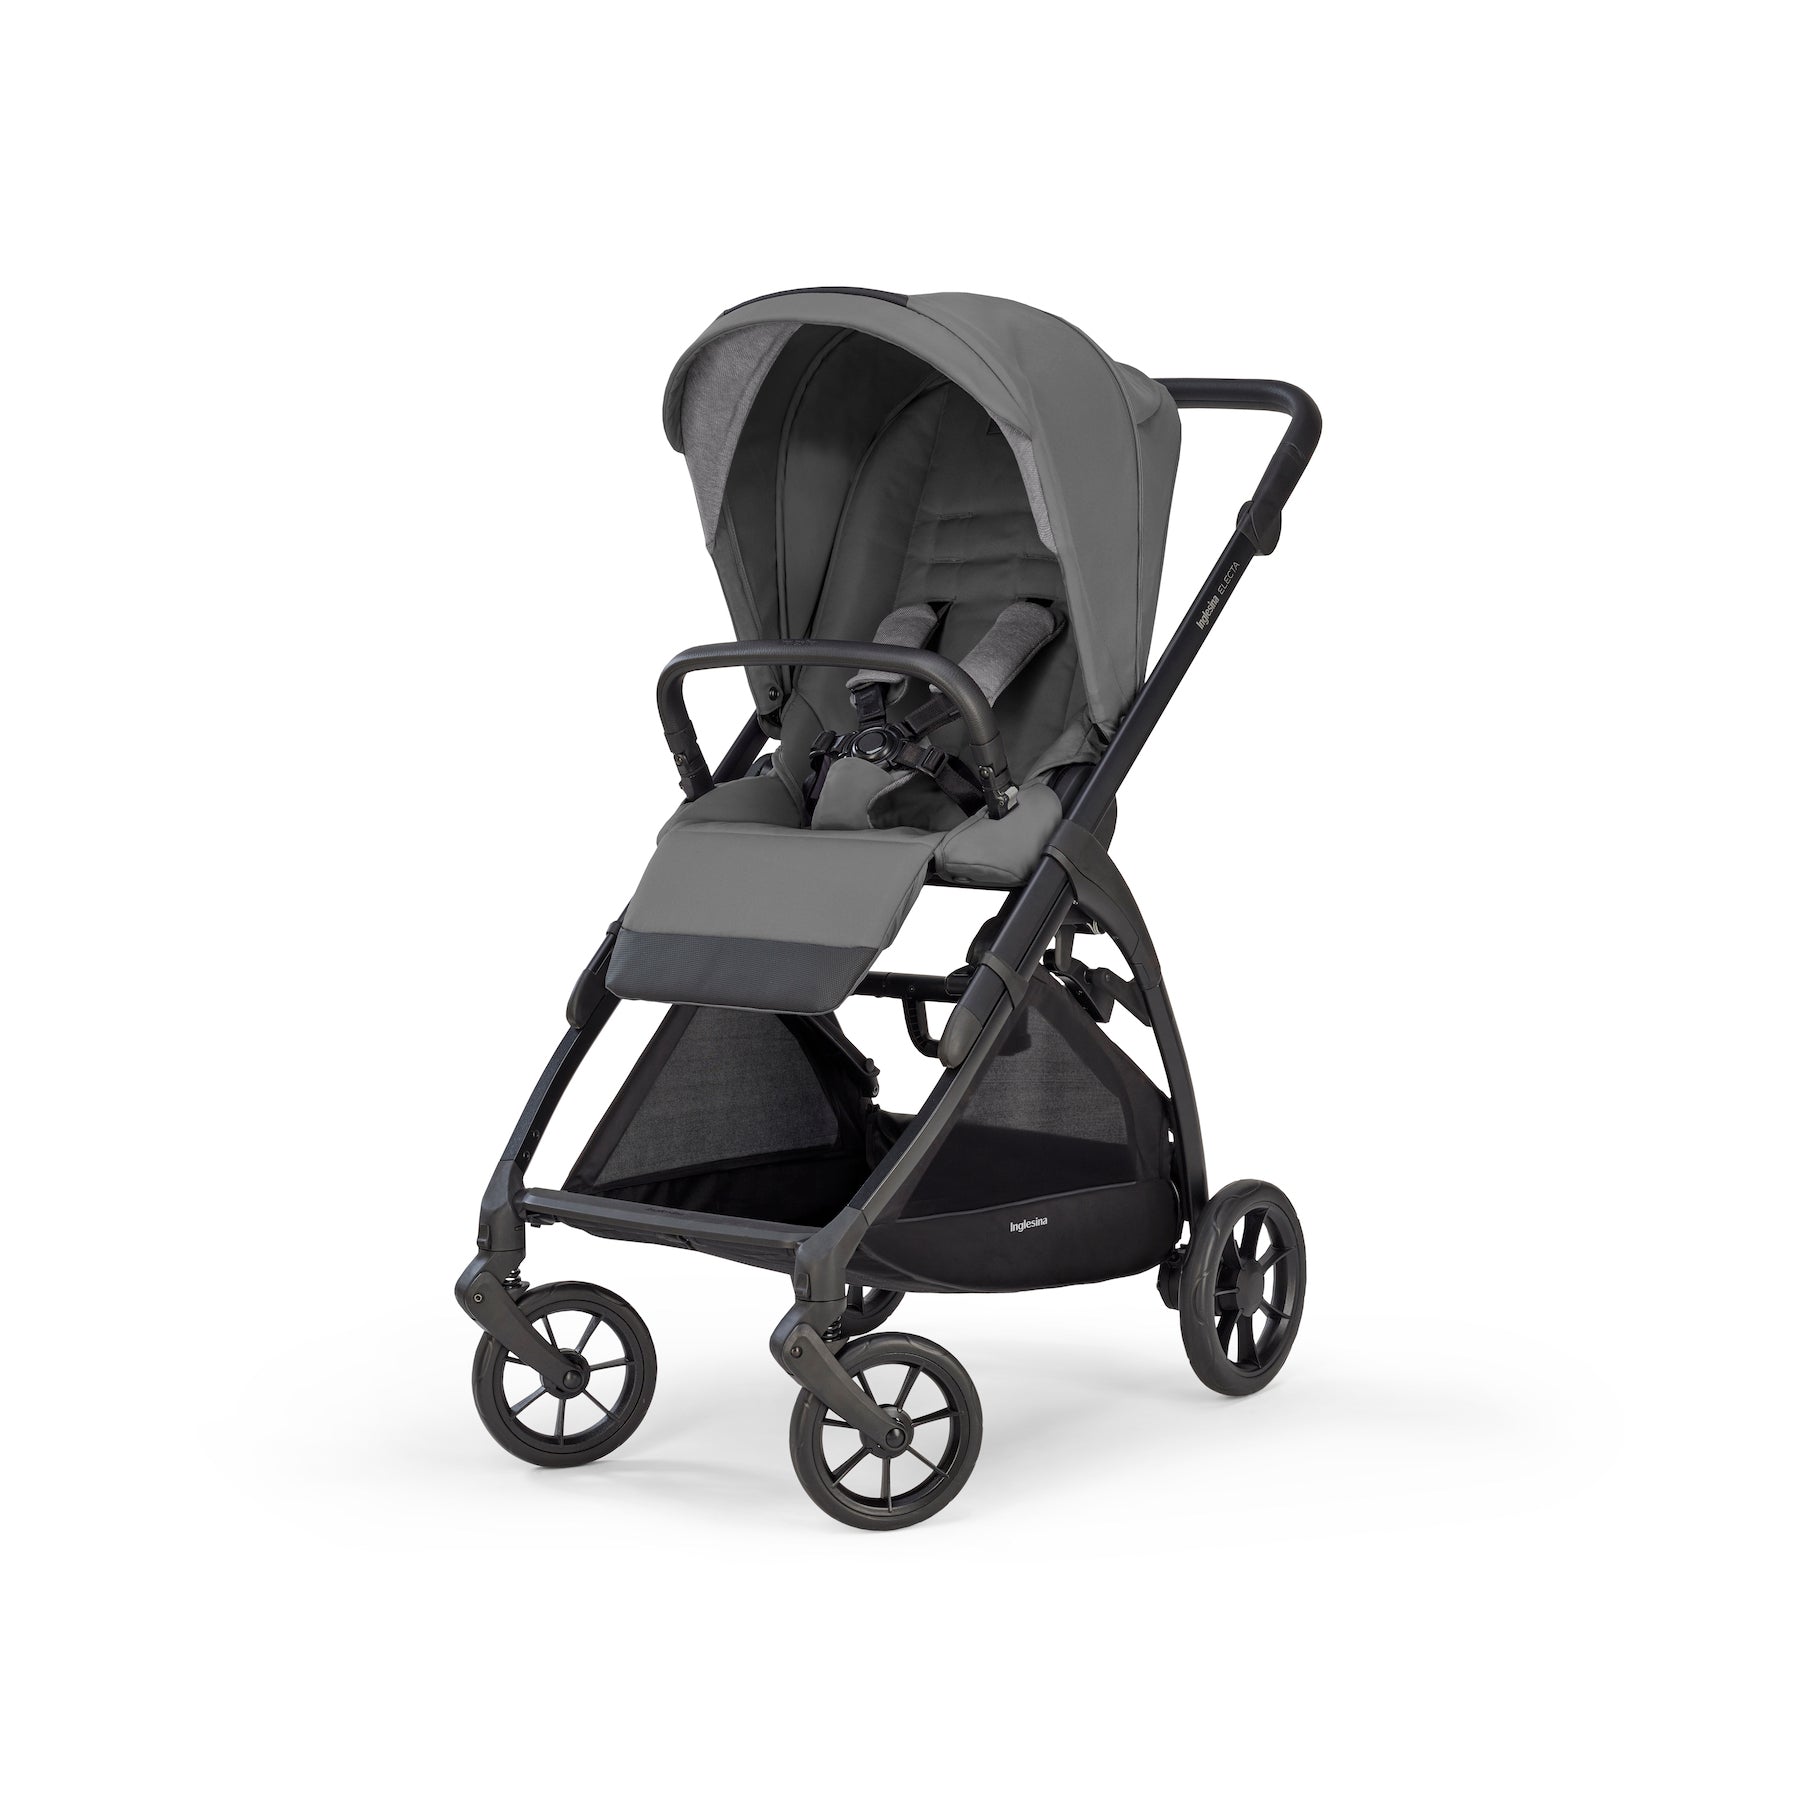 Inglesina Electa Stroller - ANB Baby -809630009014$500 - $1000